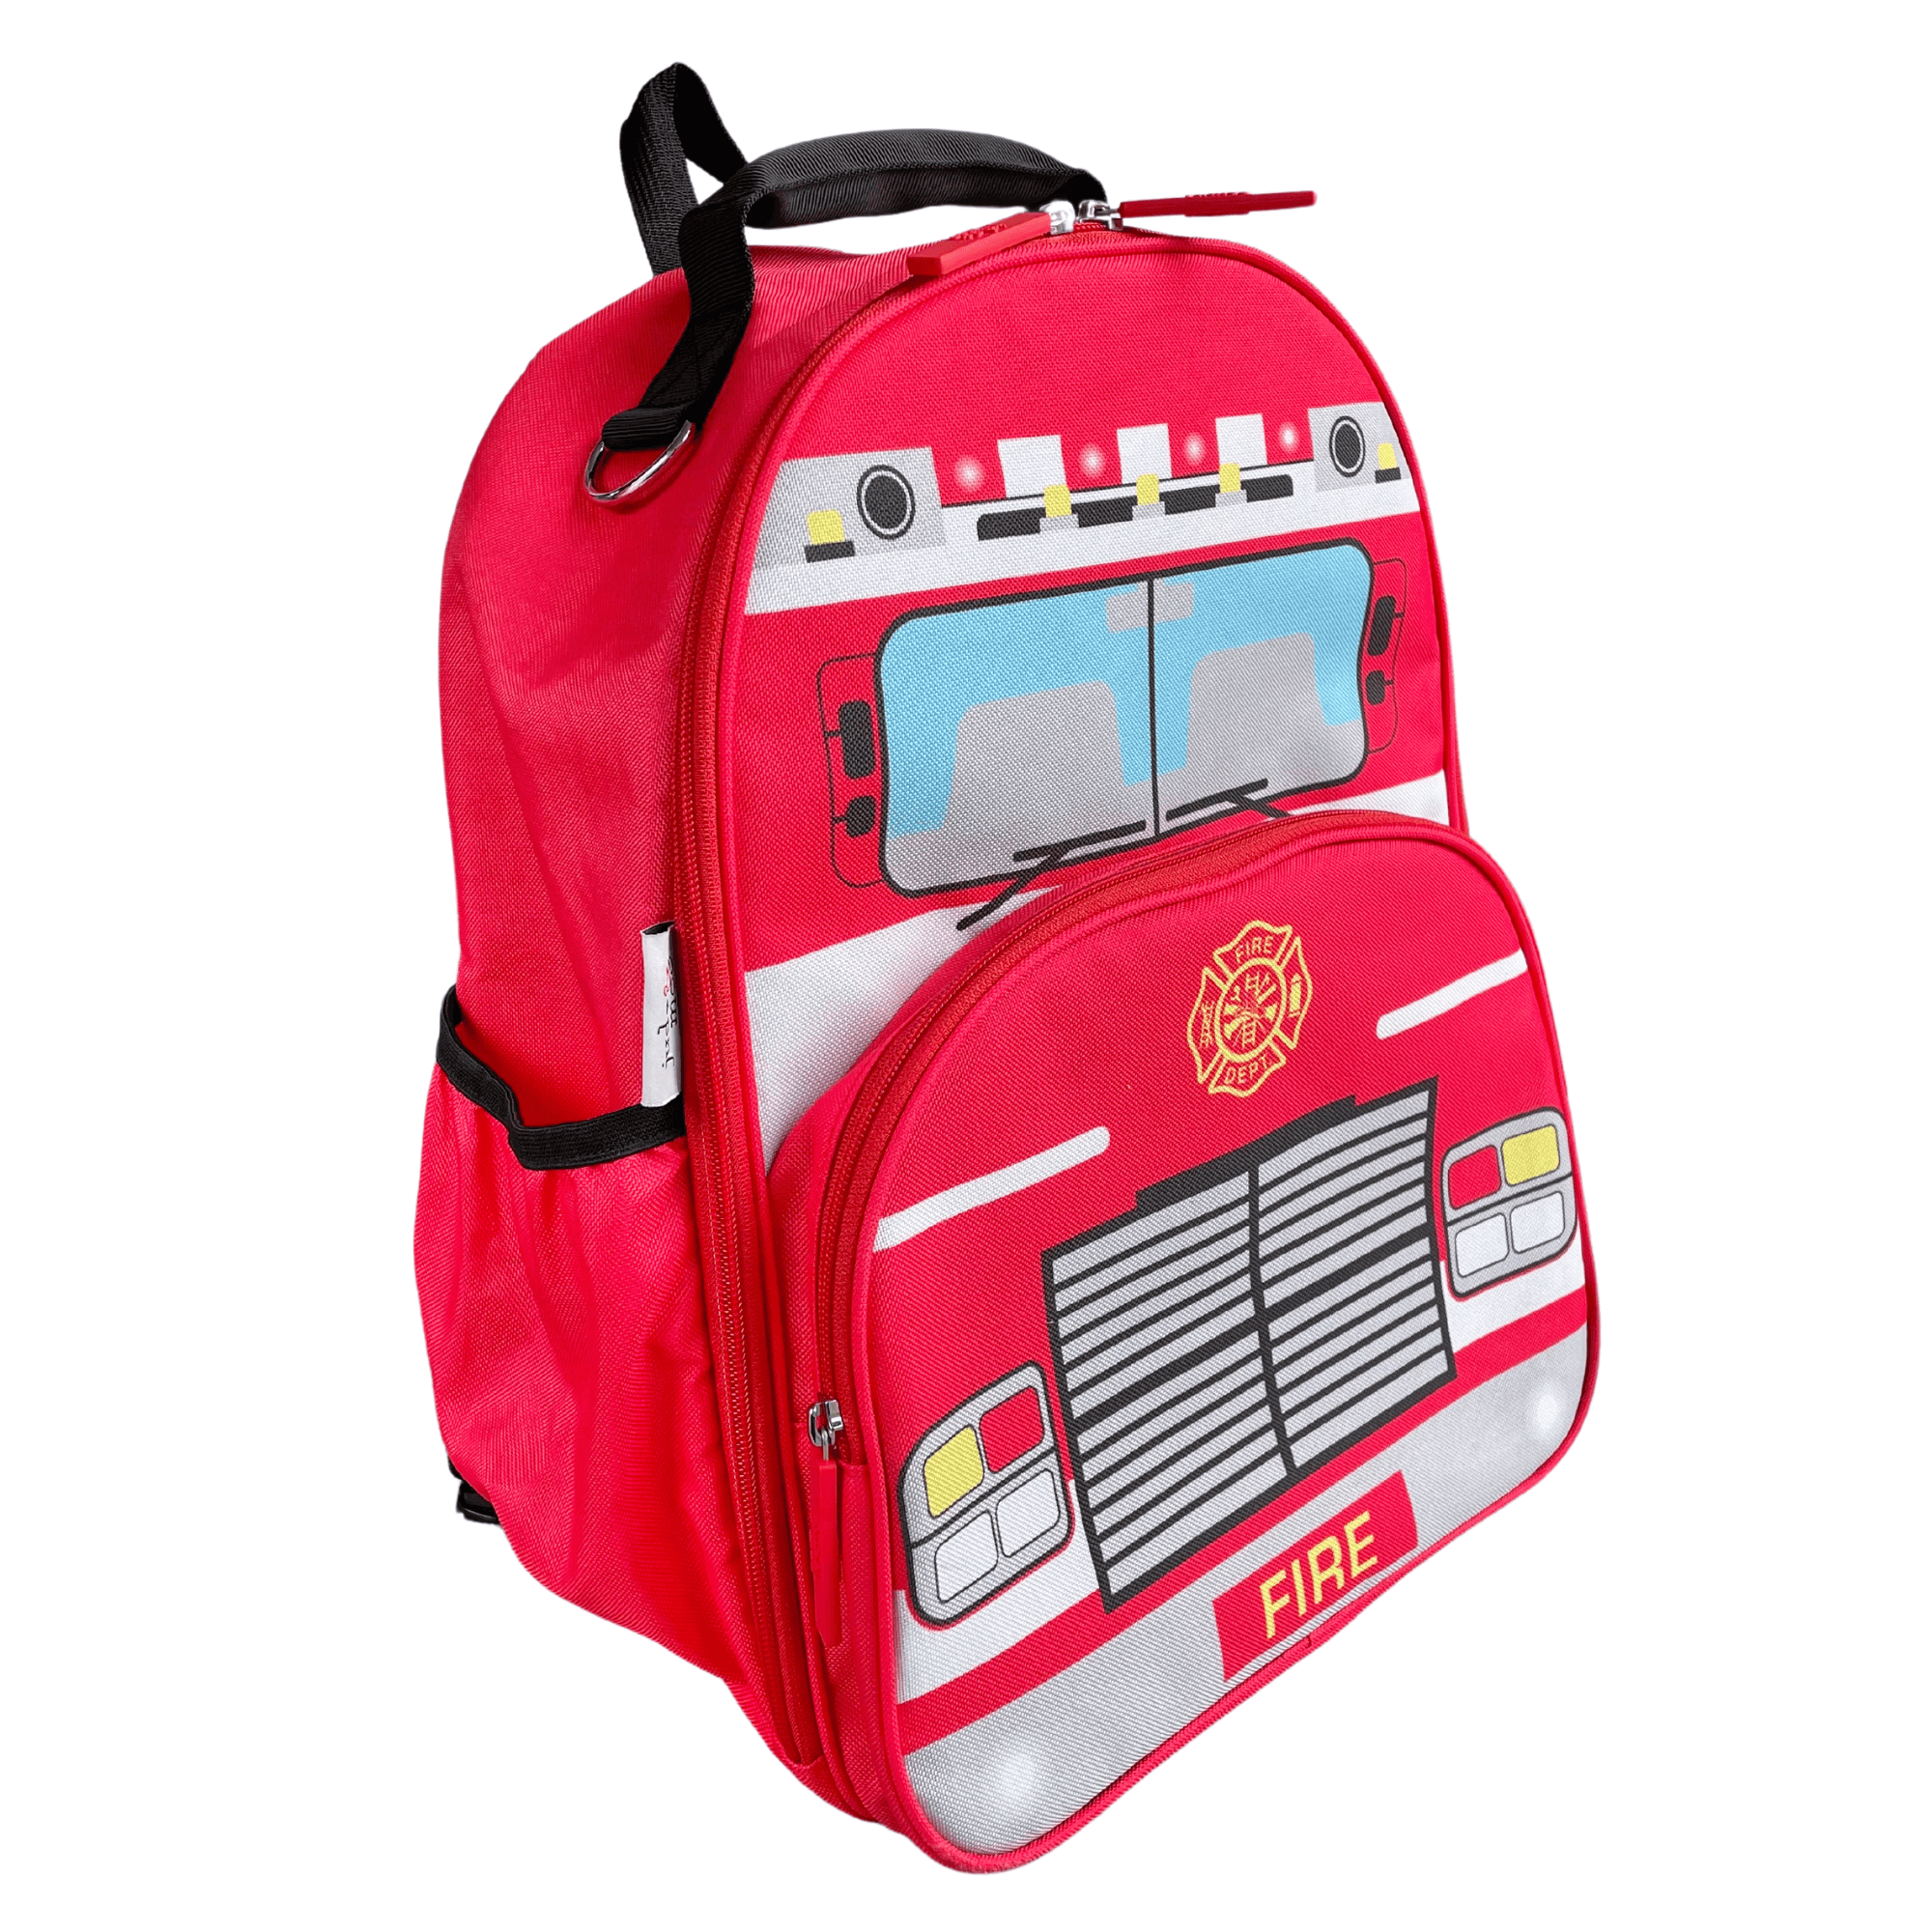 Fire Truck Backpack